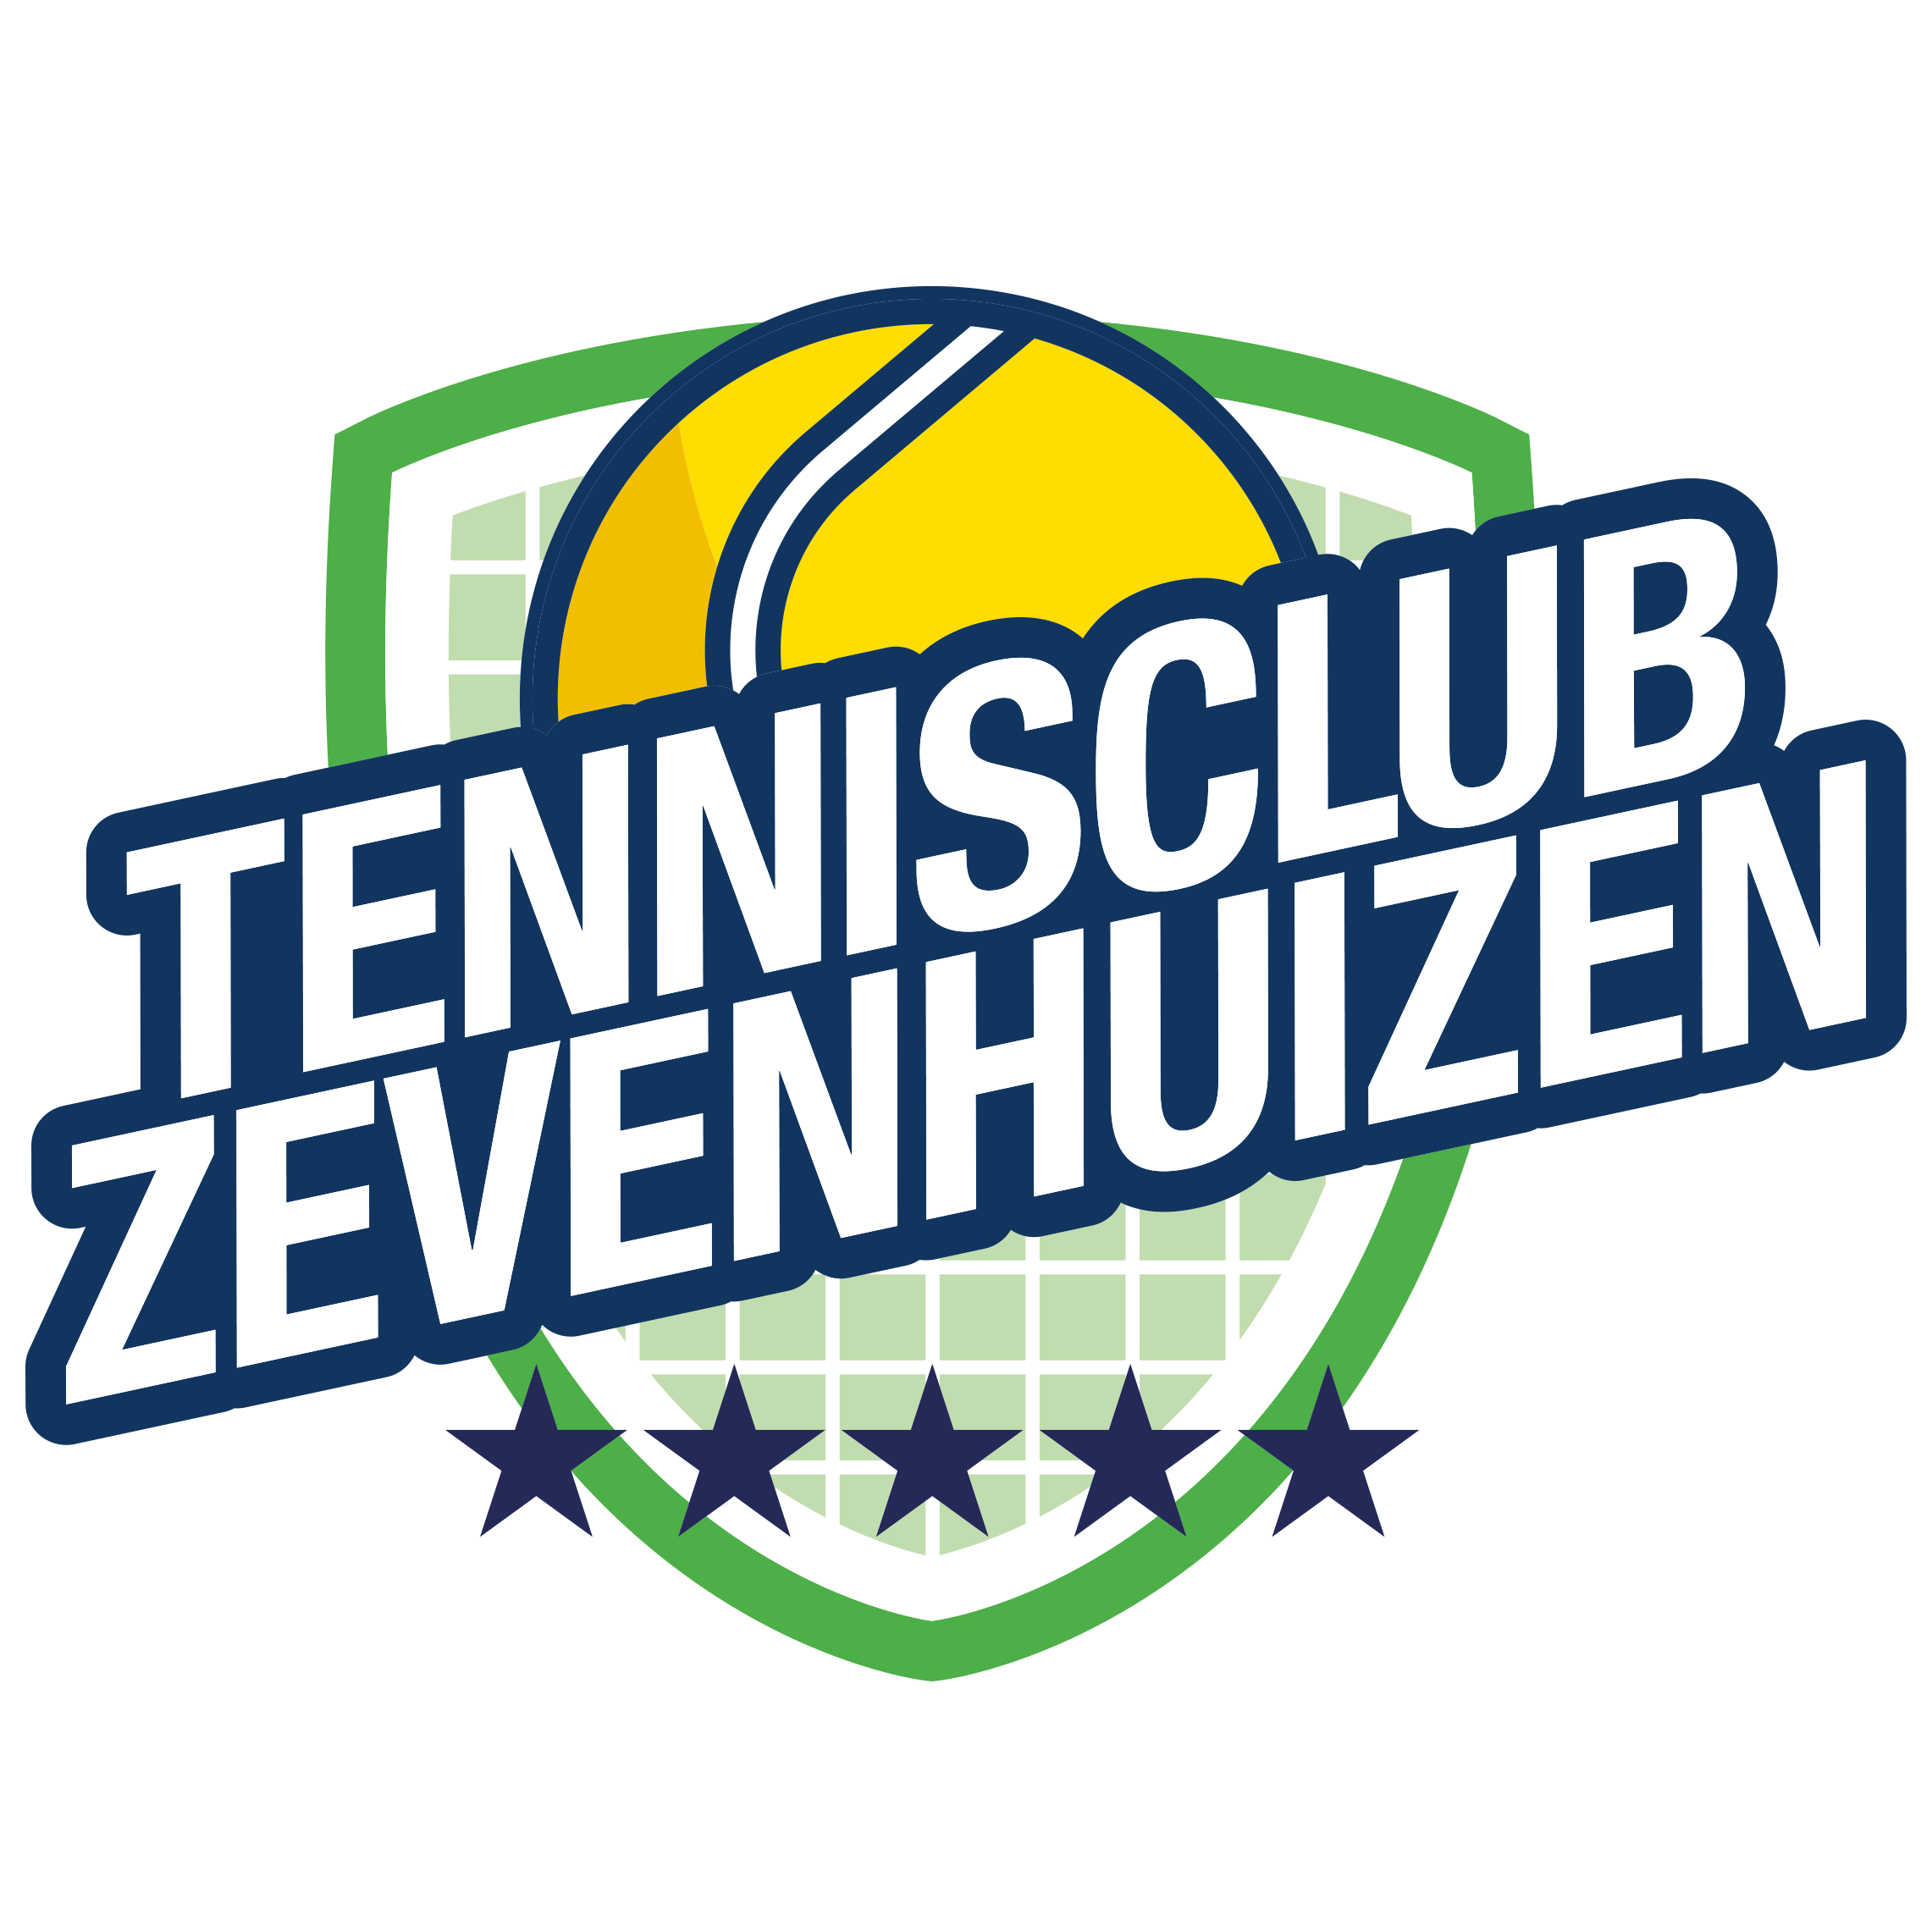 Tennisclub Zevenhuizen